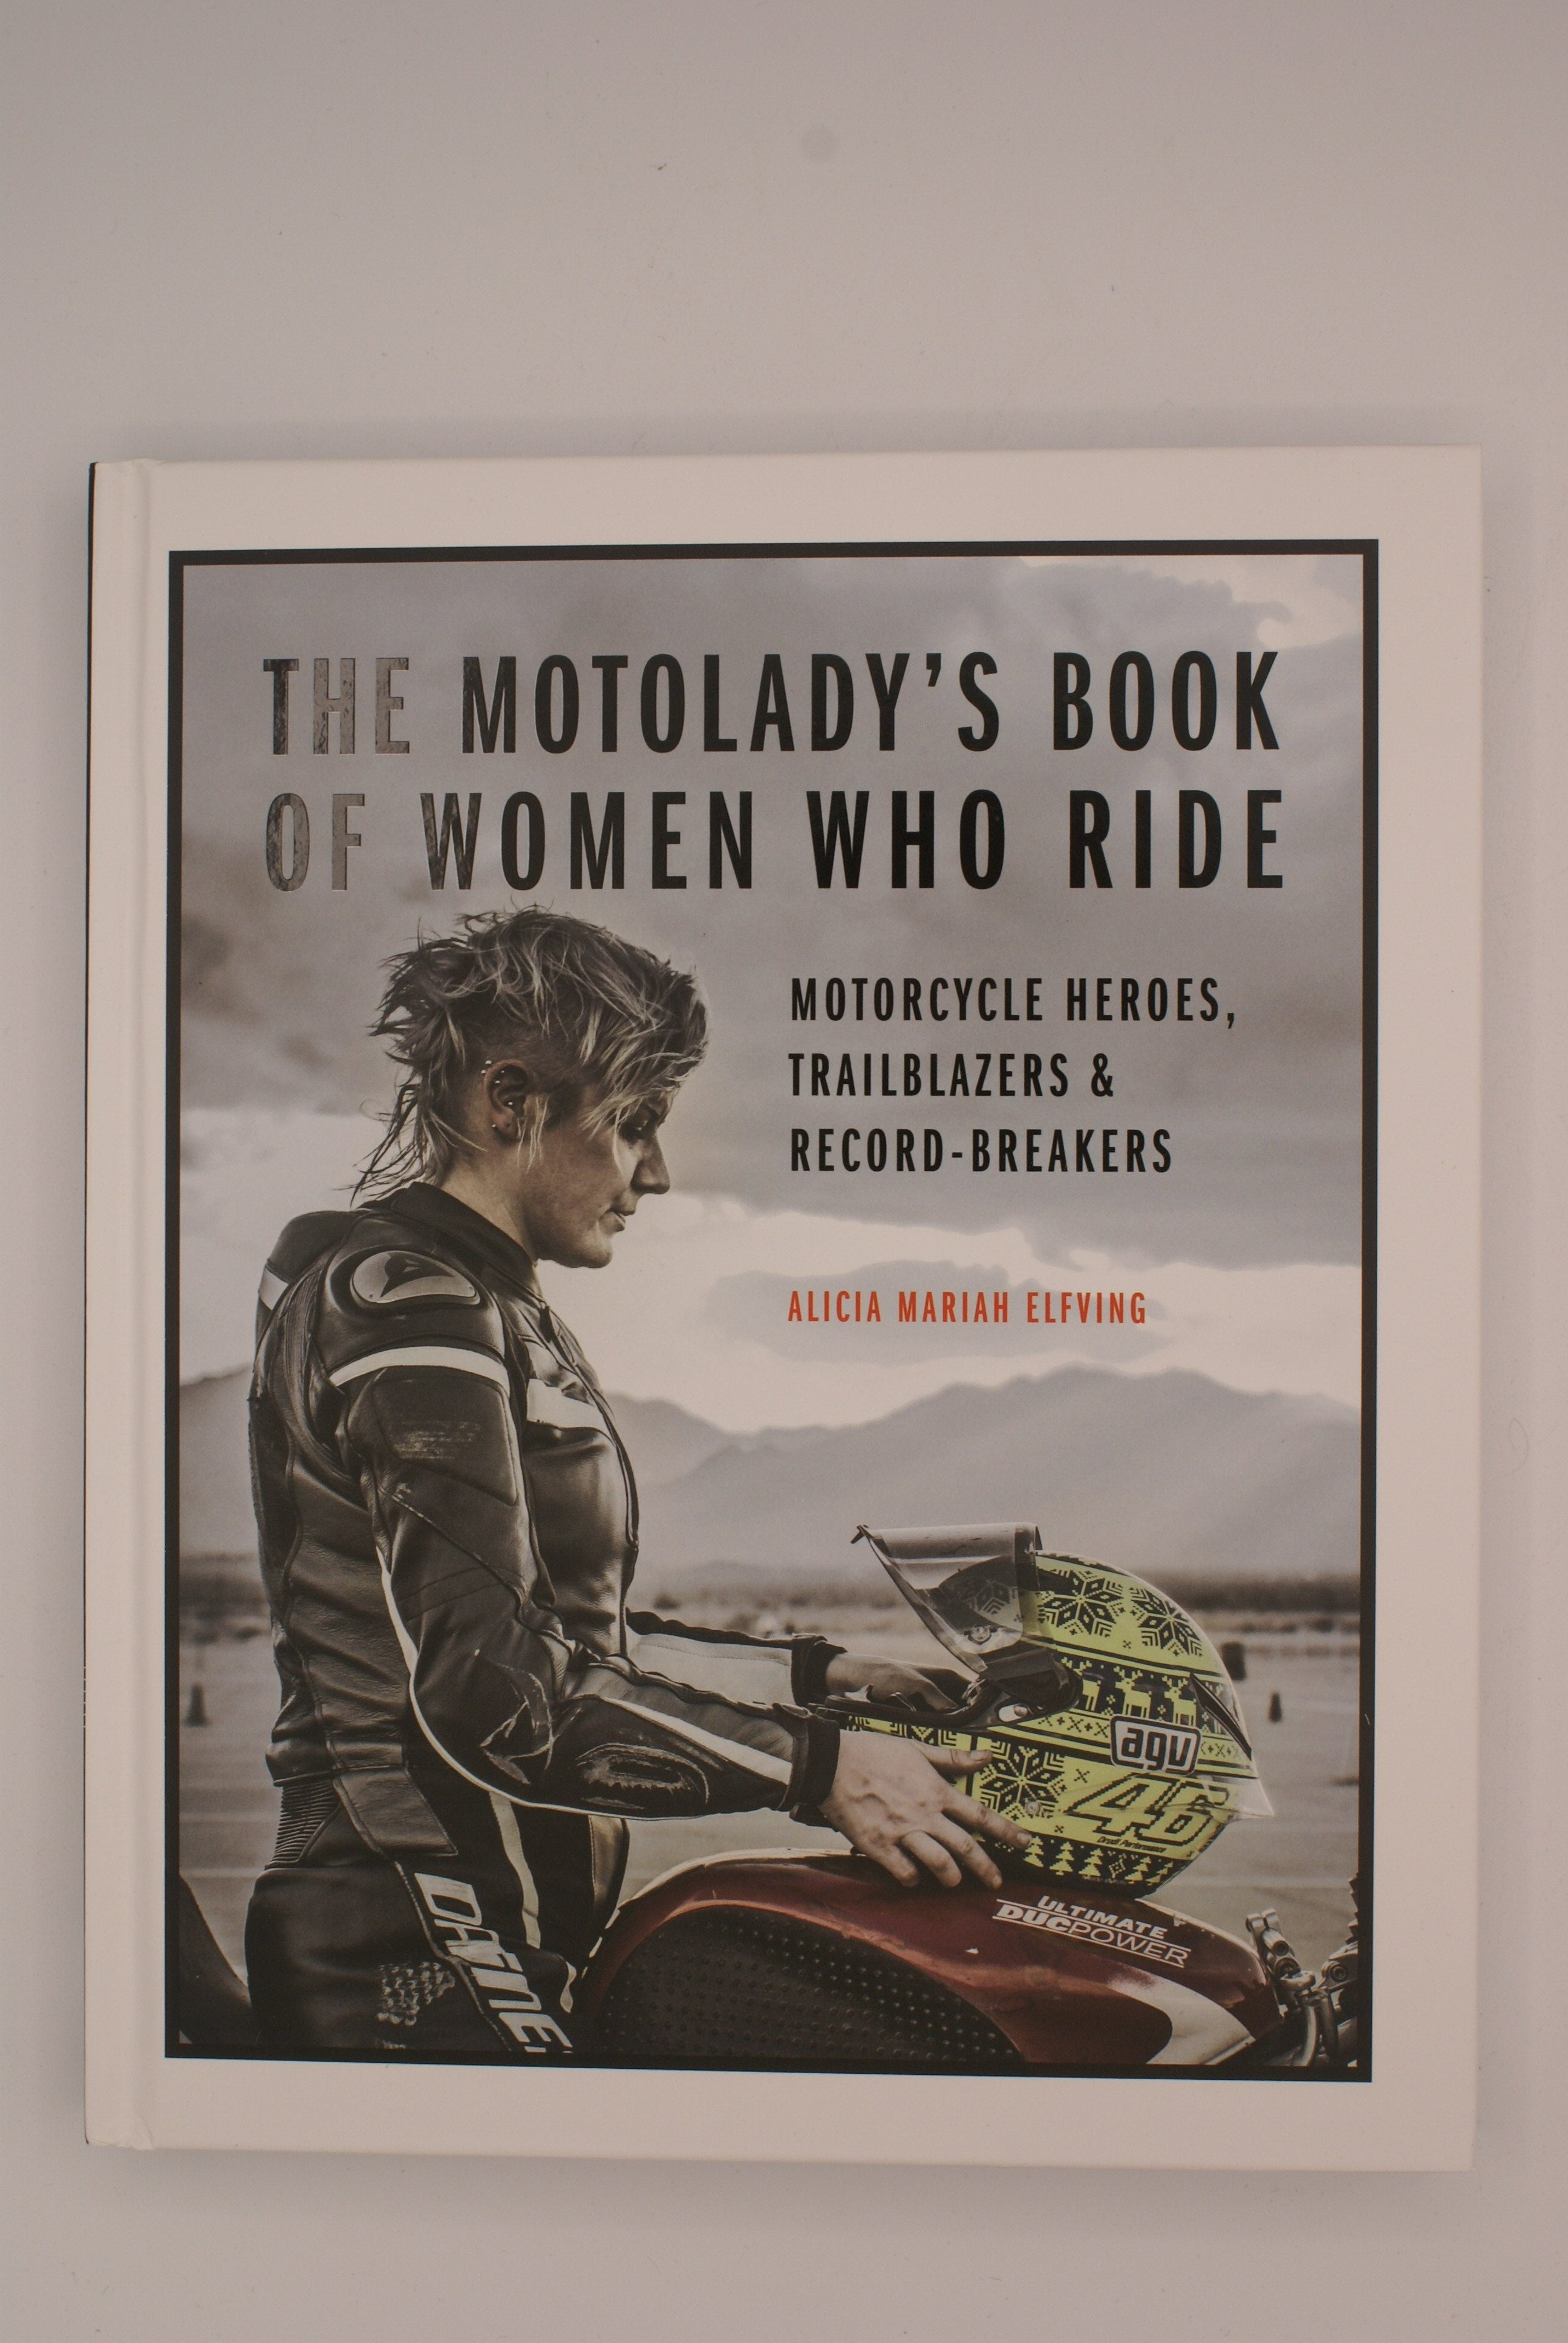 Motolady's book of women who ride